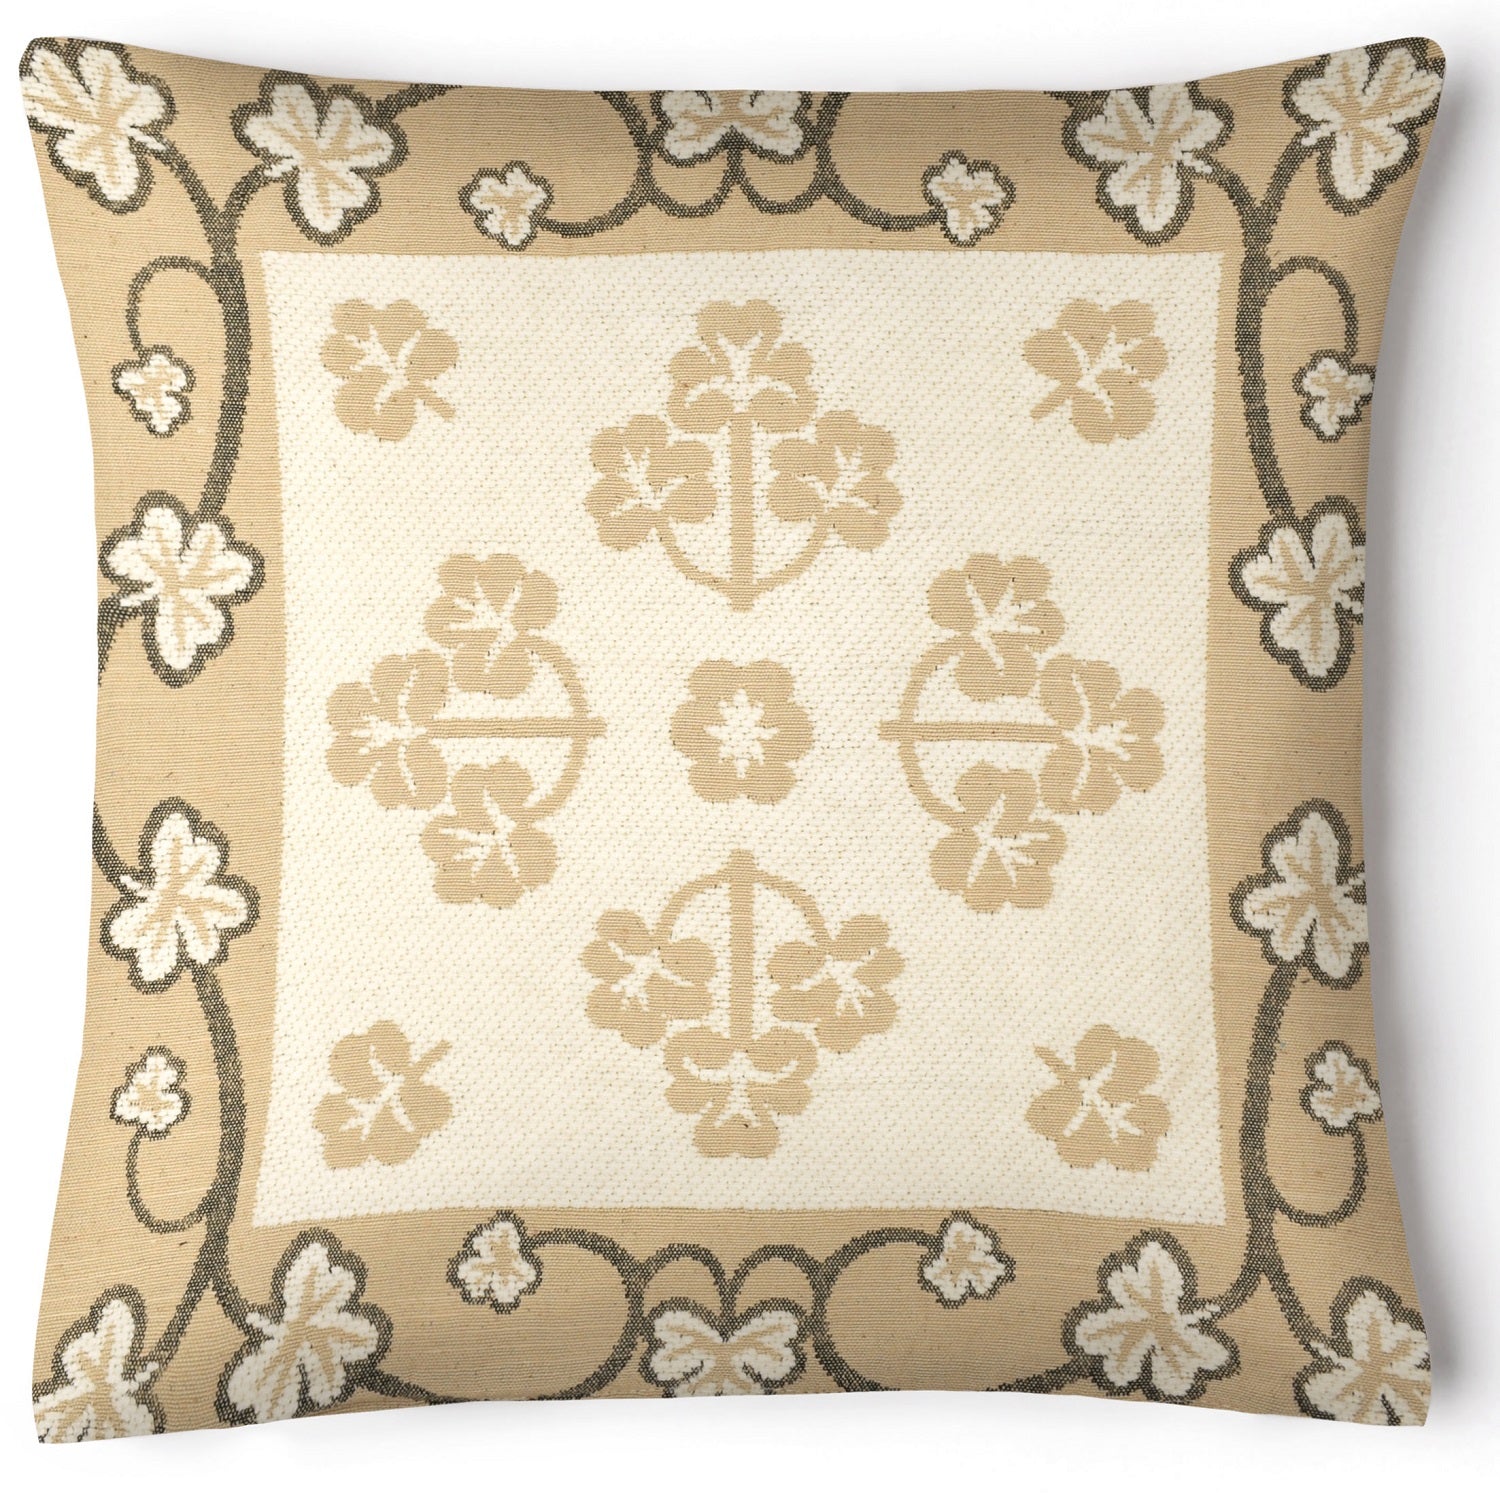 Chenille Flowers Decorative Sofa Scatter Cushion Cover - Cream